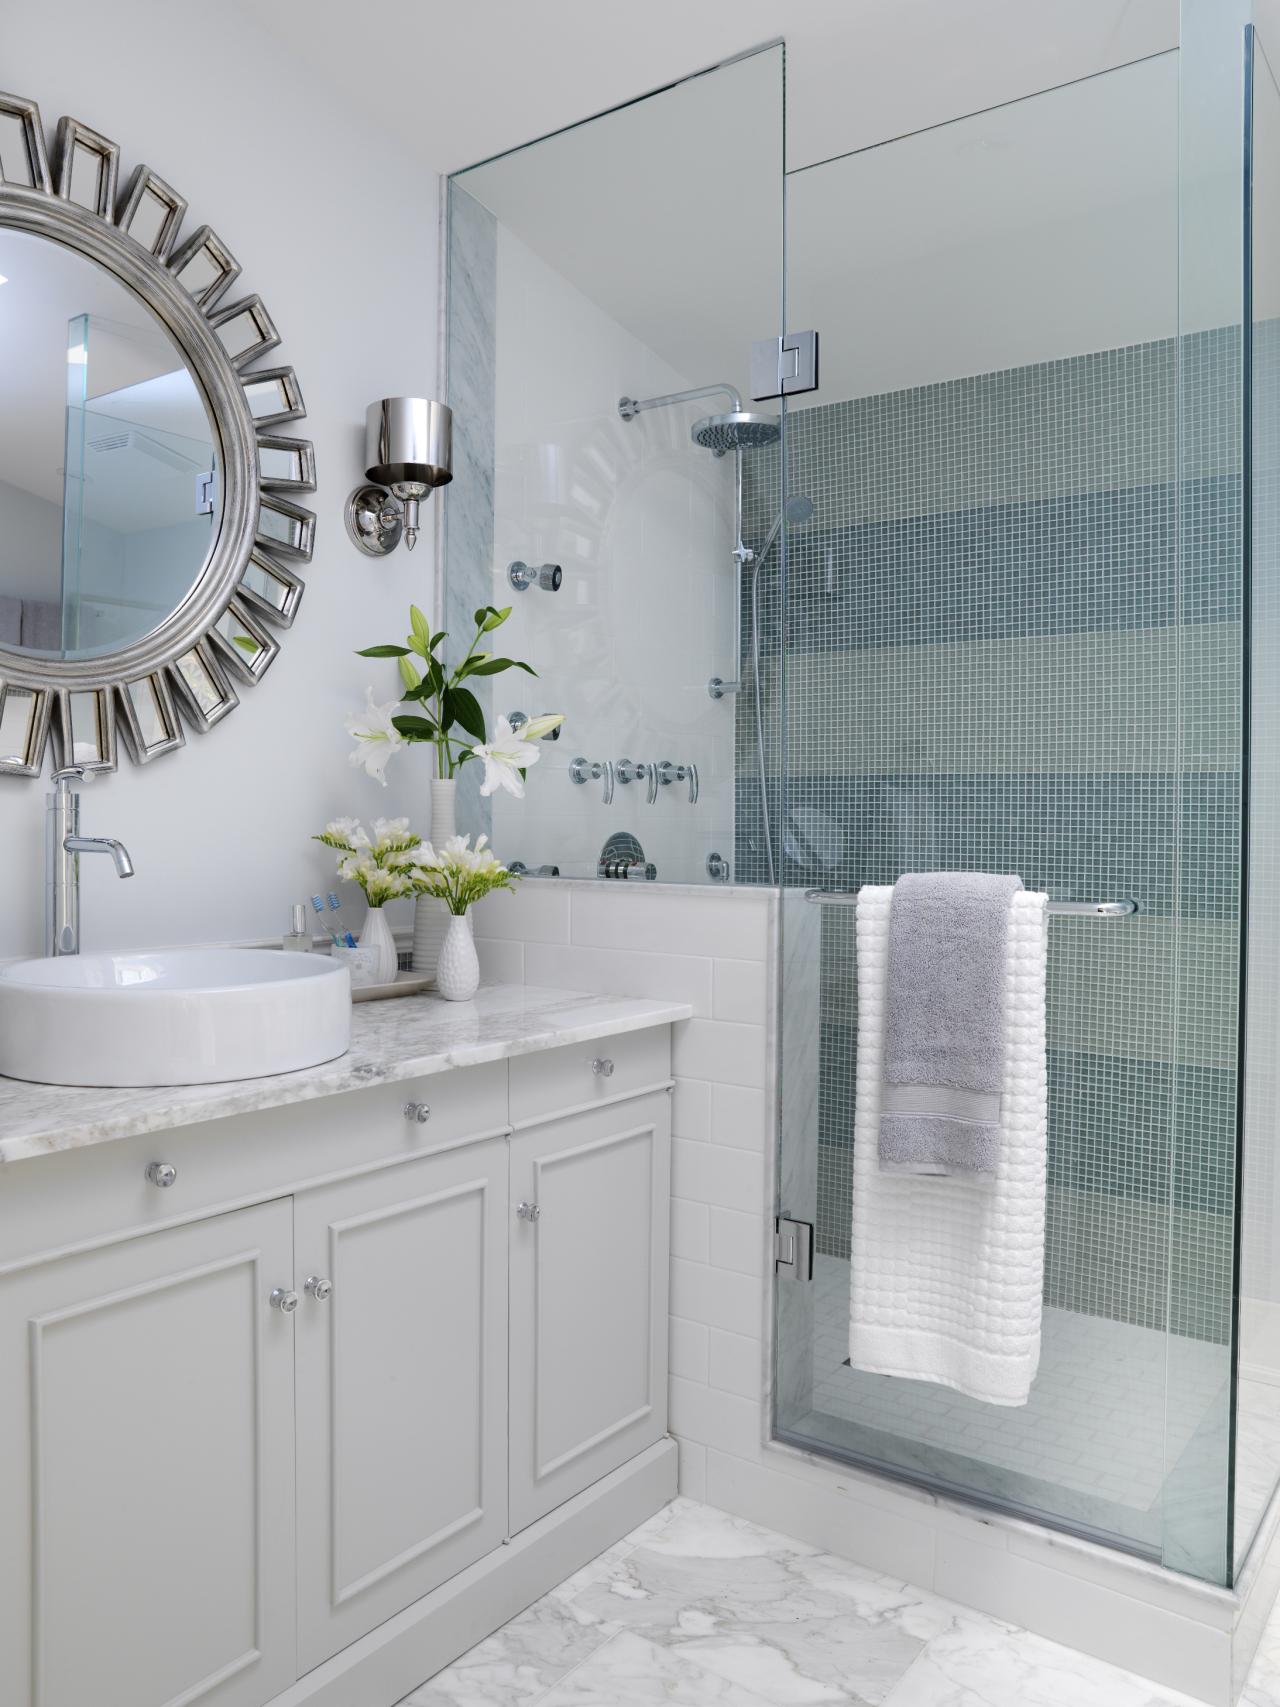 10 Yellow Bathroom Ideas HGTV s Decorating & Design Blog